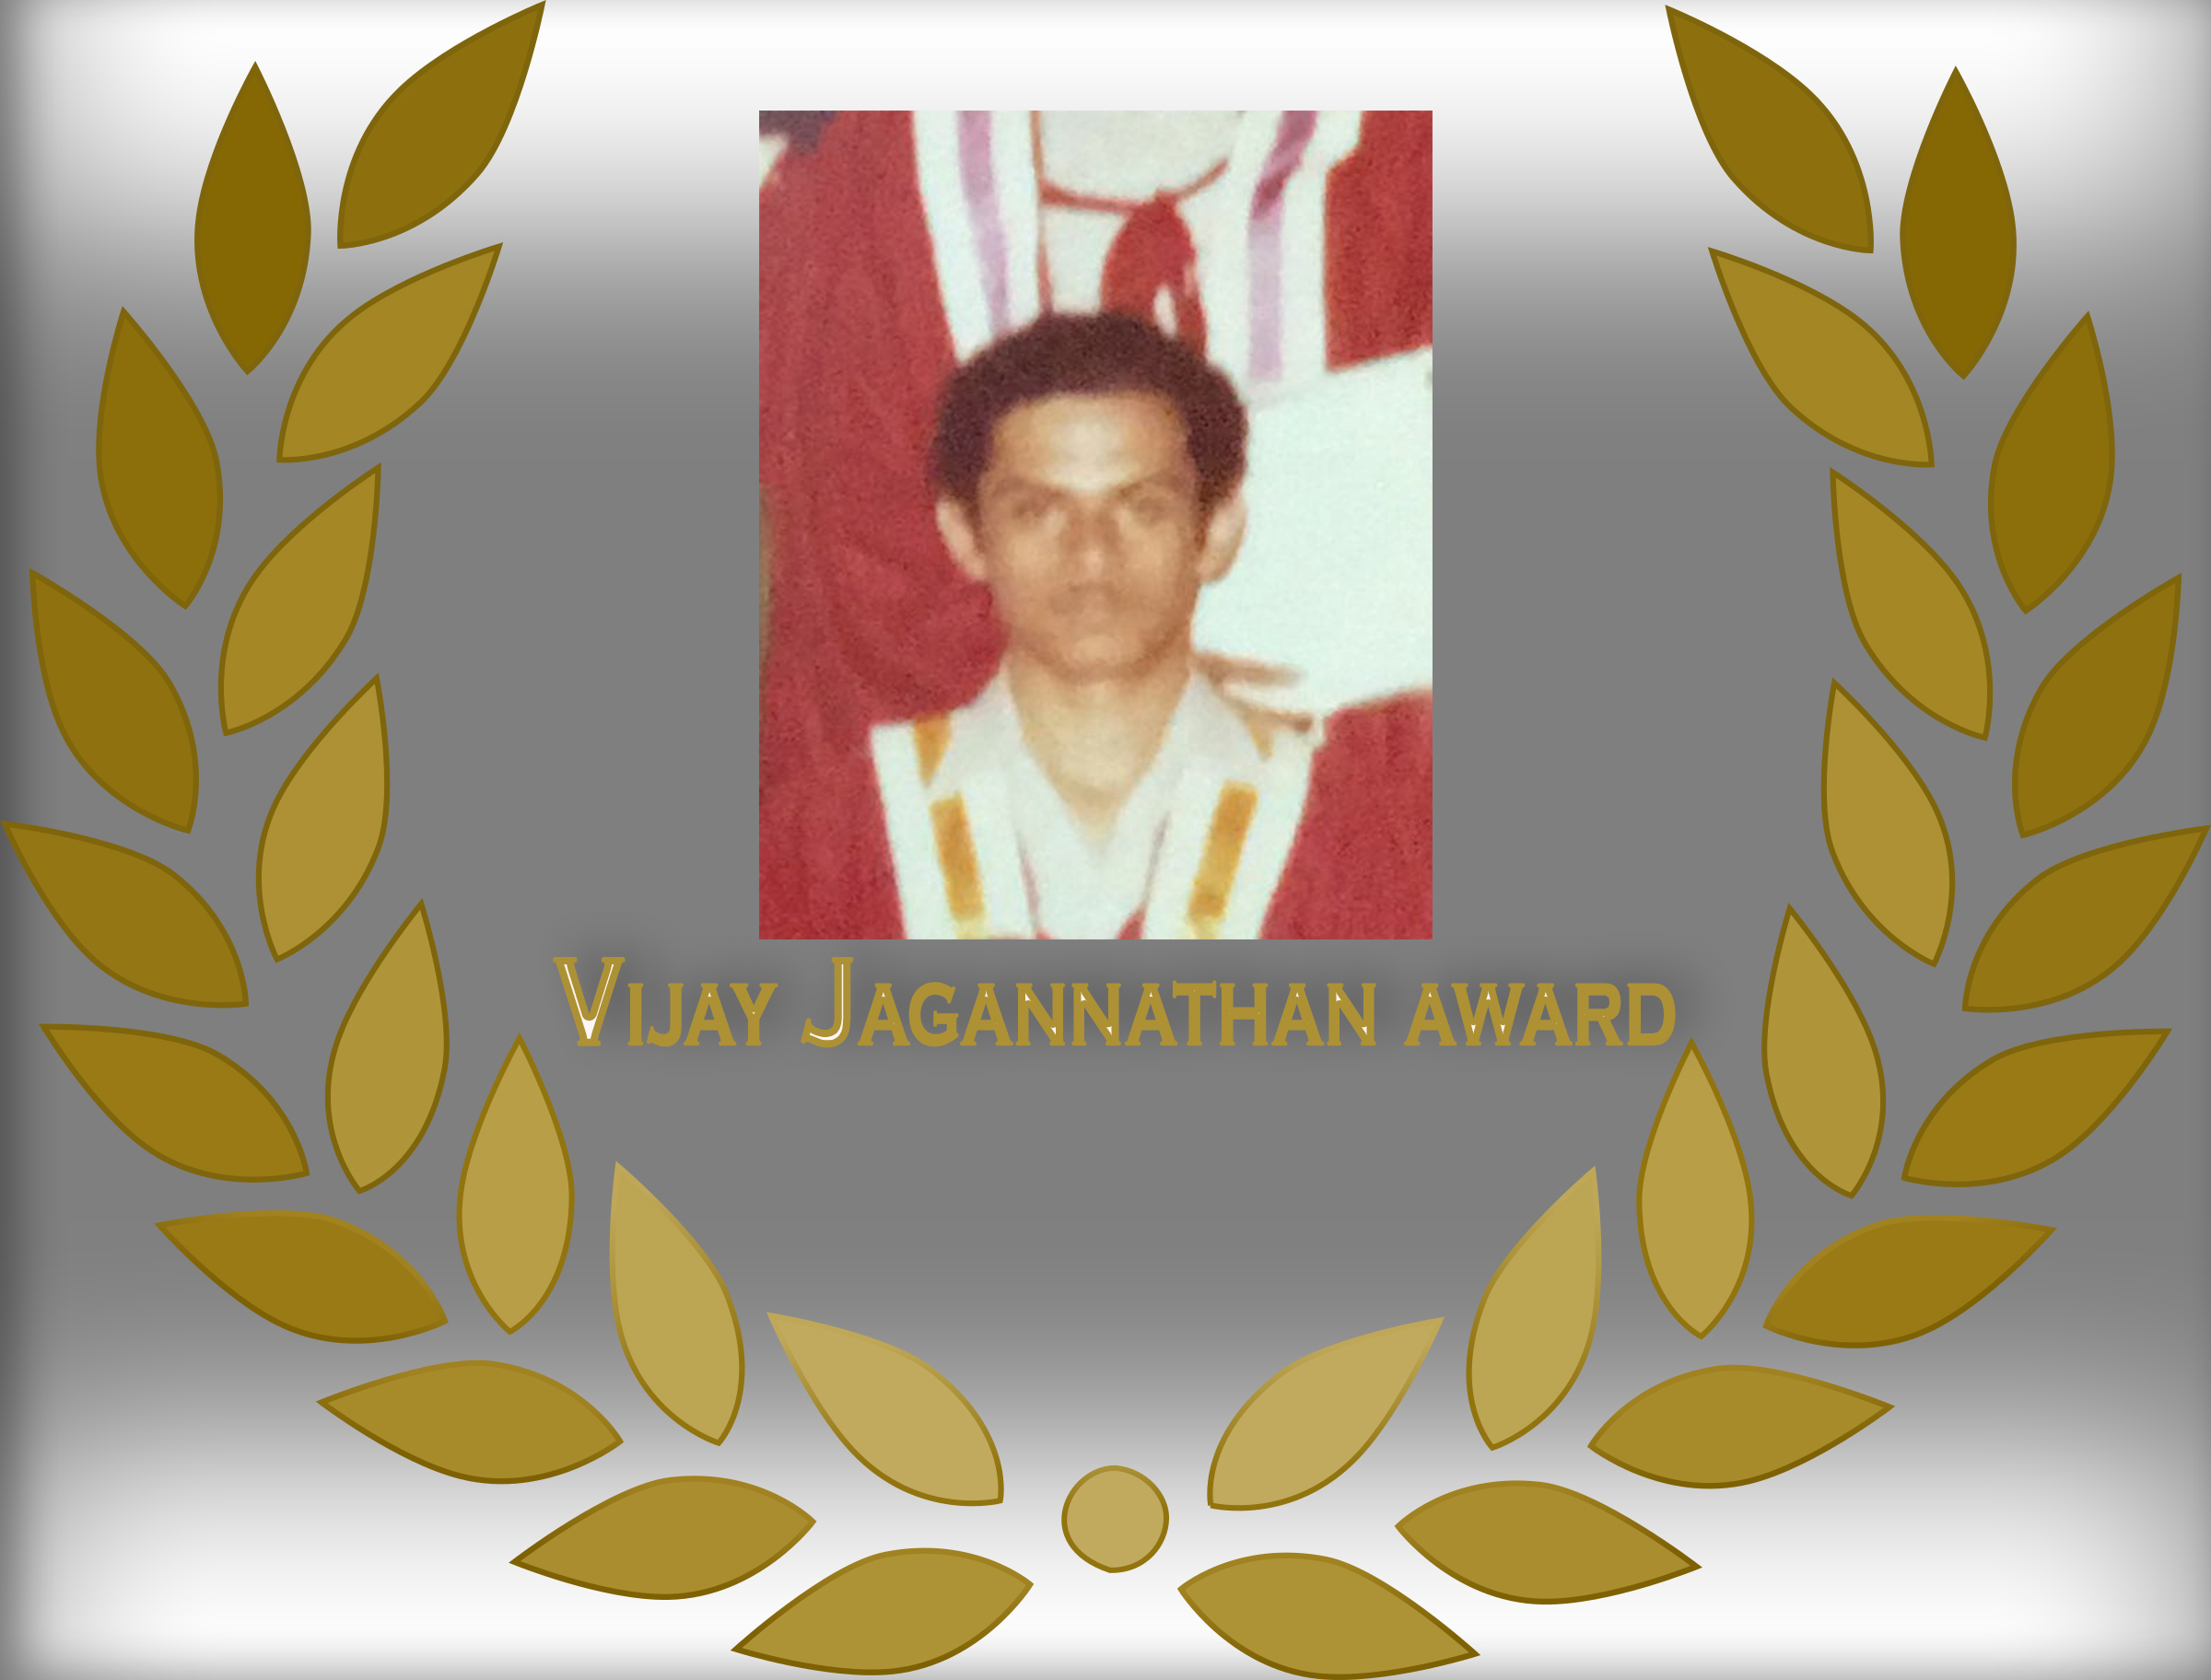 Vijay Jagannathan award